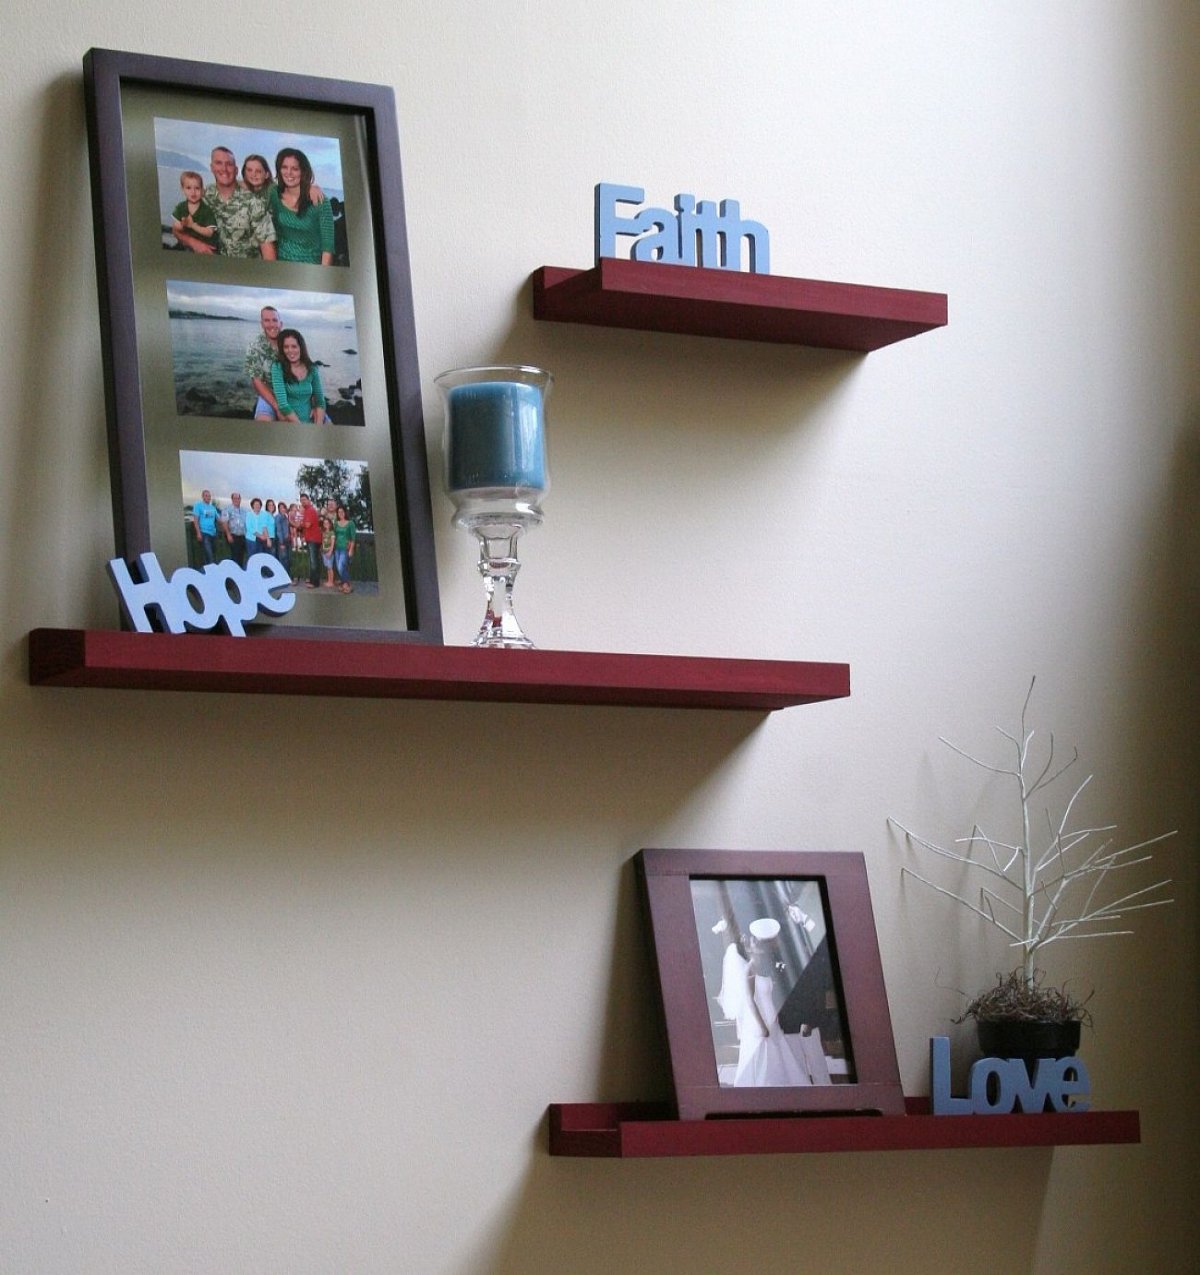 Decorative Wood Wall Shelves - Decor Ideas on What To Put On Decorative Wall Sconces Shelves id=30073